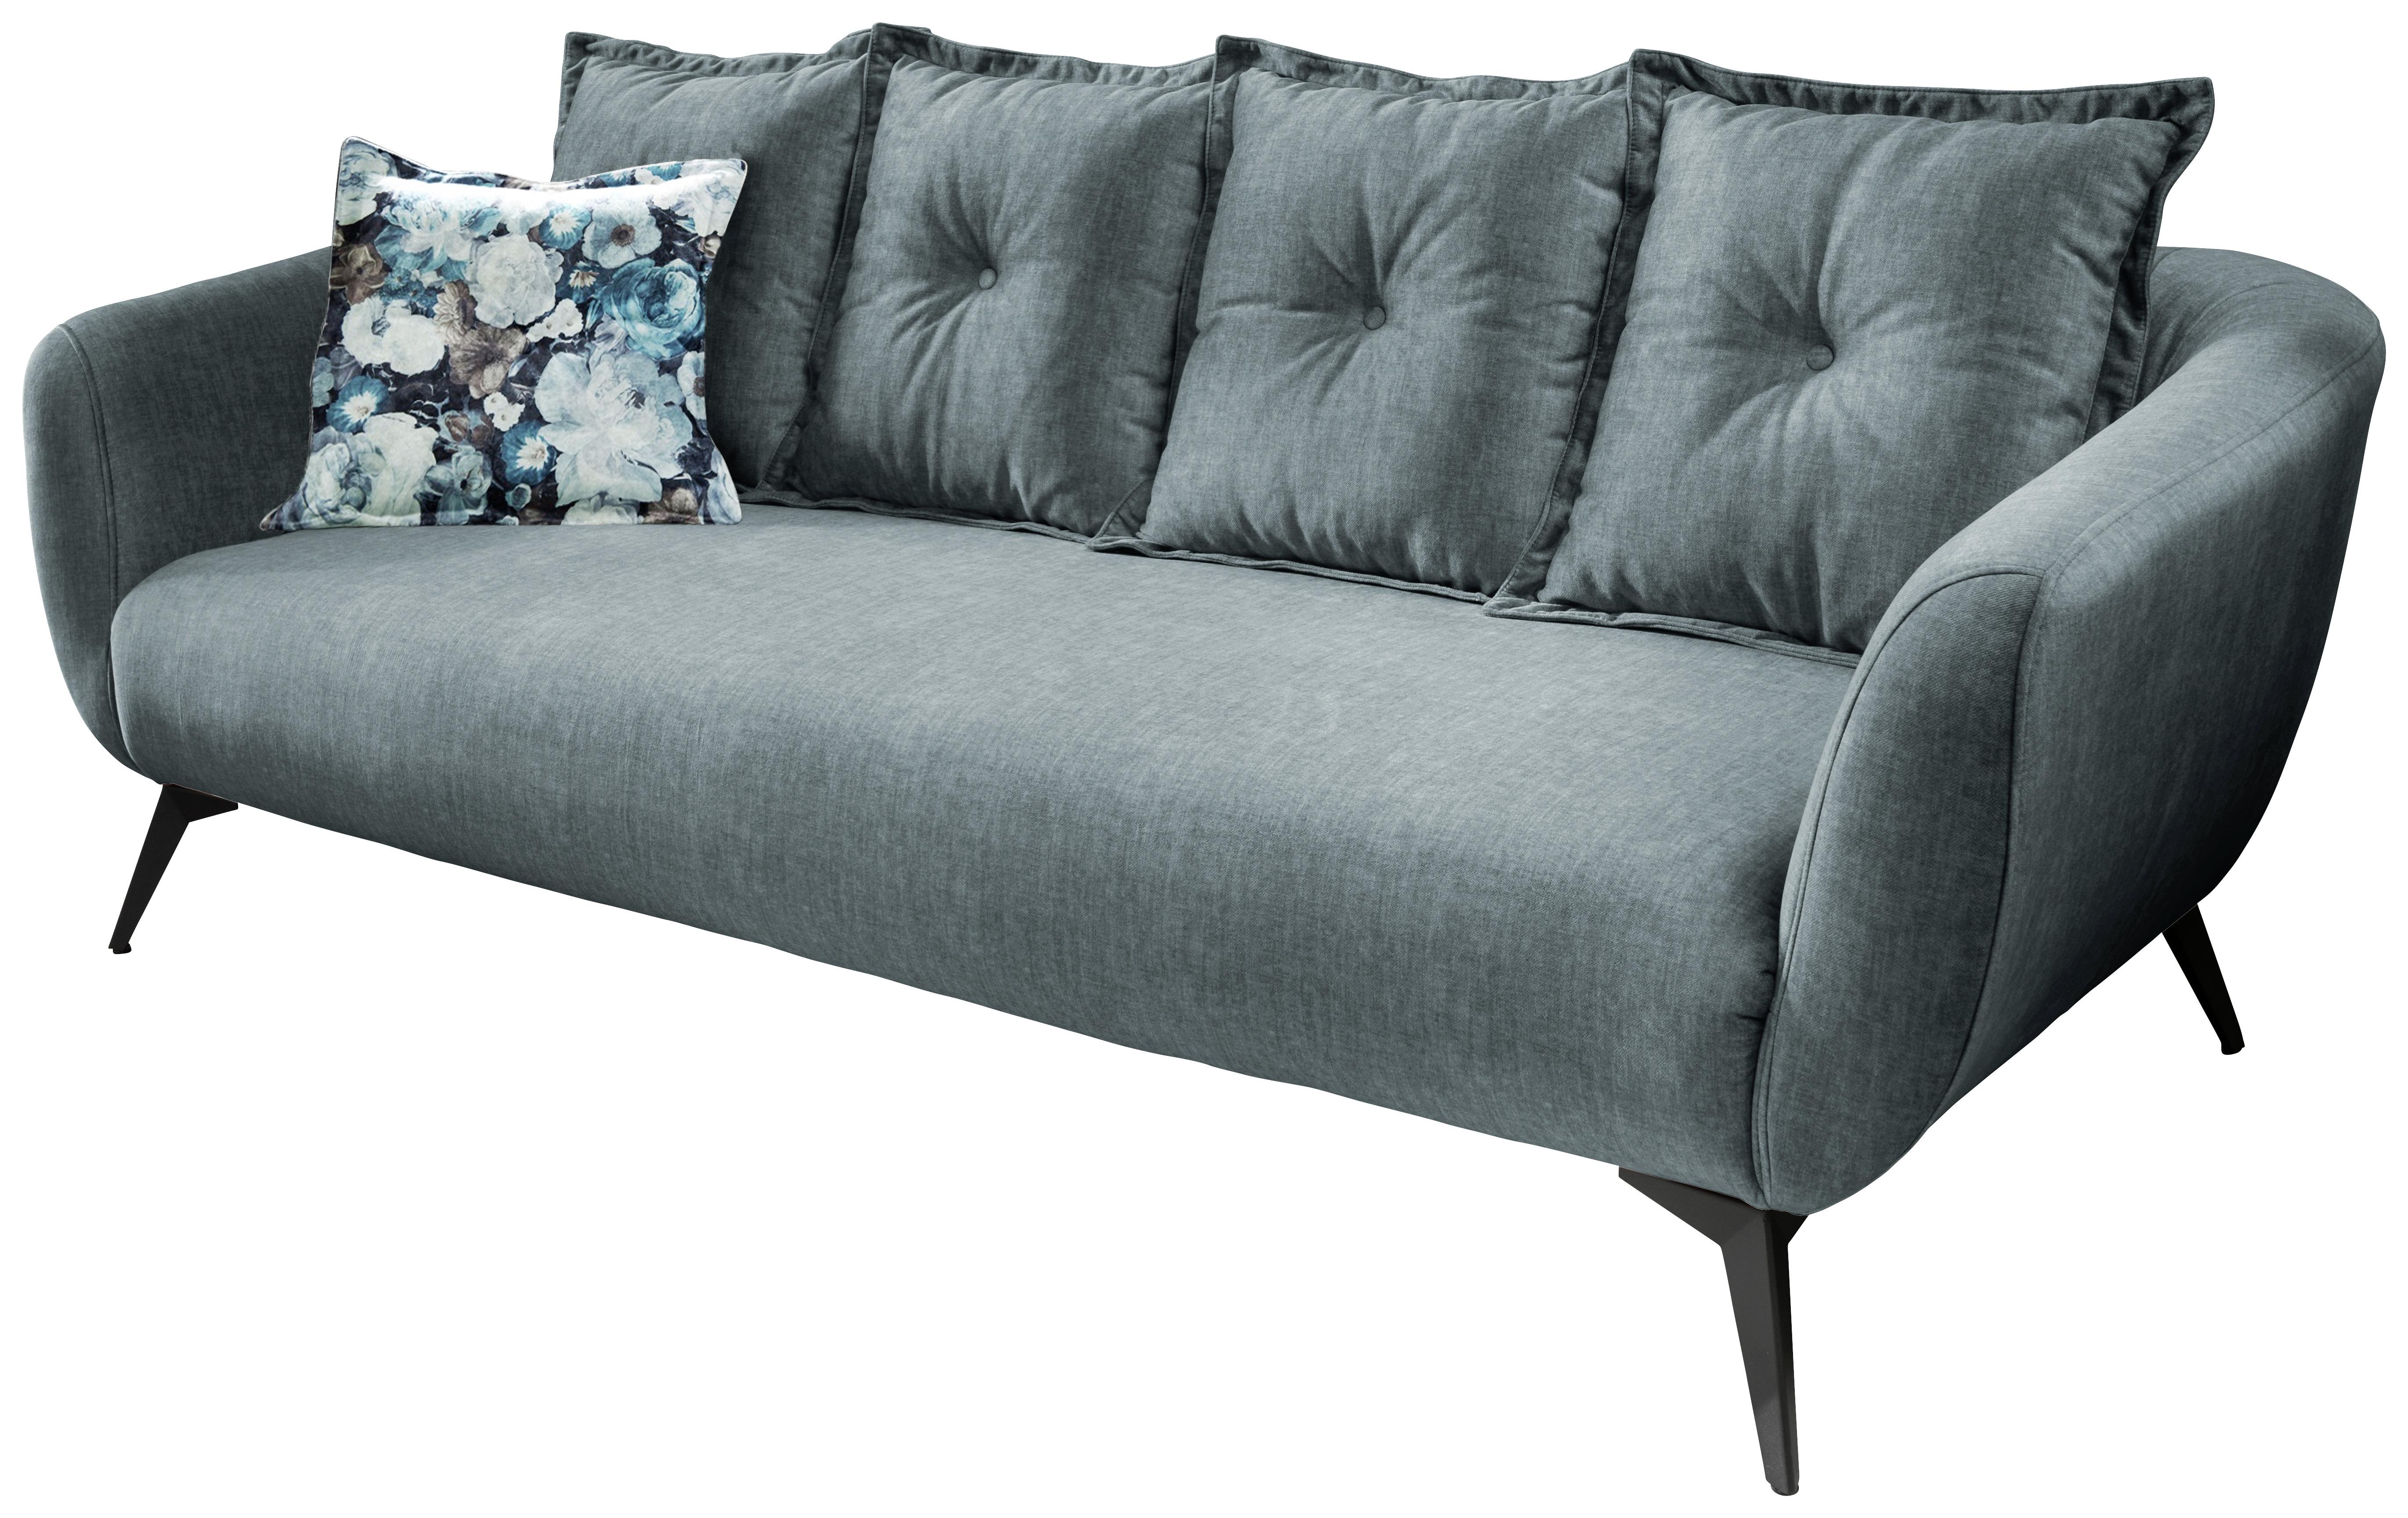 3-Sitzer-Sofa Baggio mit Kissen Blau/Grün - Blau/Multicolor, MODERN, Holz/Textil (236/94/103cm) - Livetastic